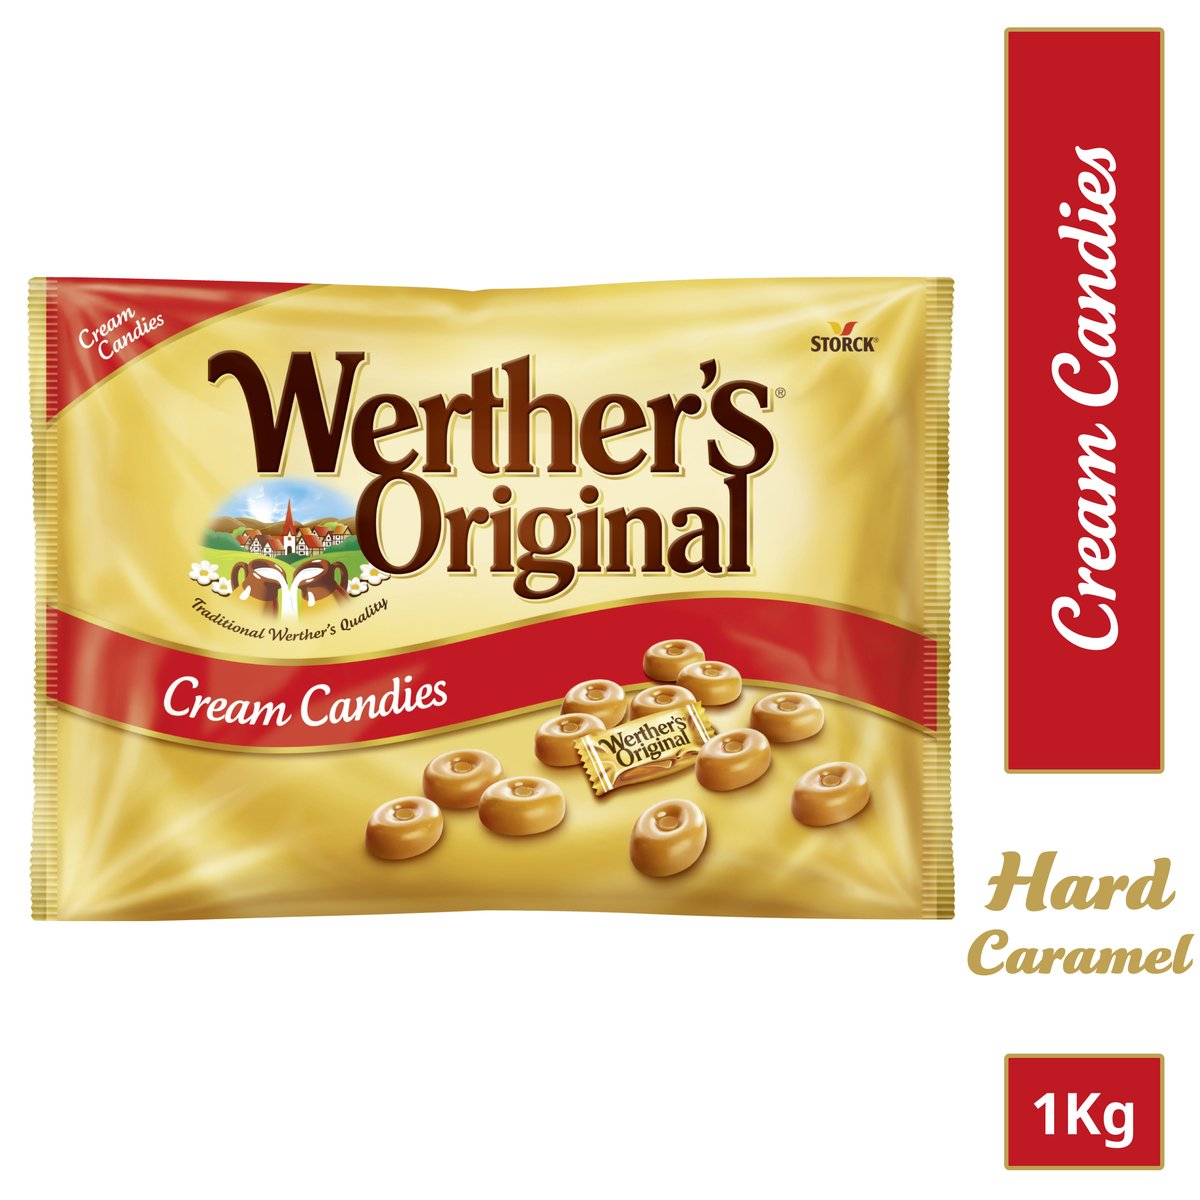 Storck Werthers Original Caramel Filled Cream Candy 1kg Online At Best Price Candy Lulu Qatar